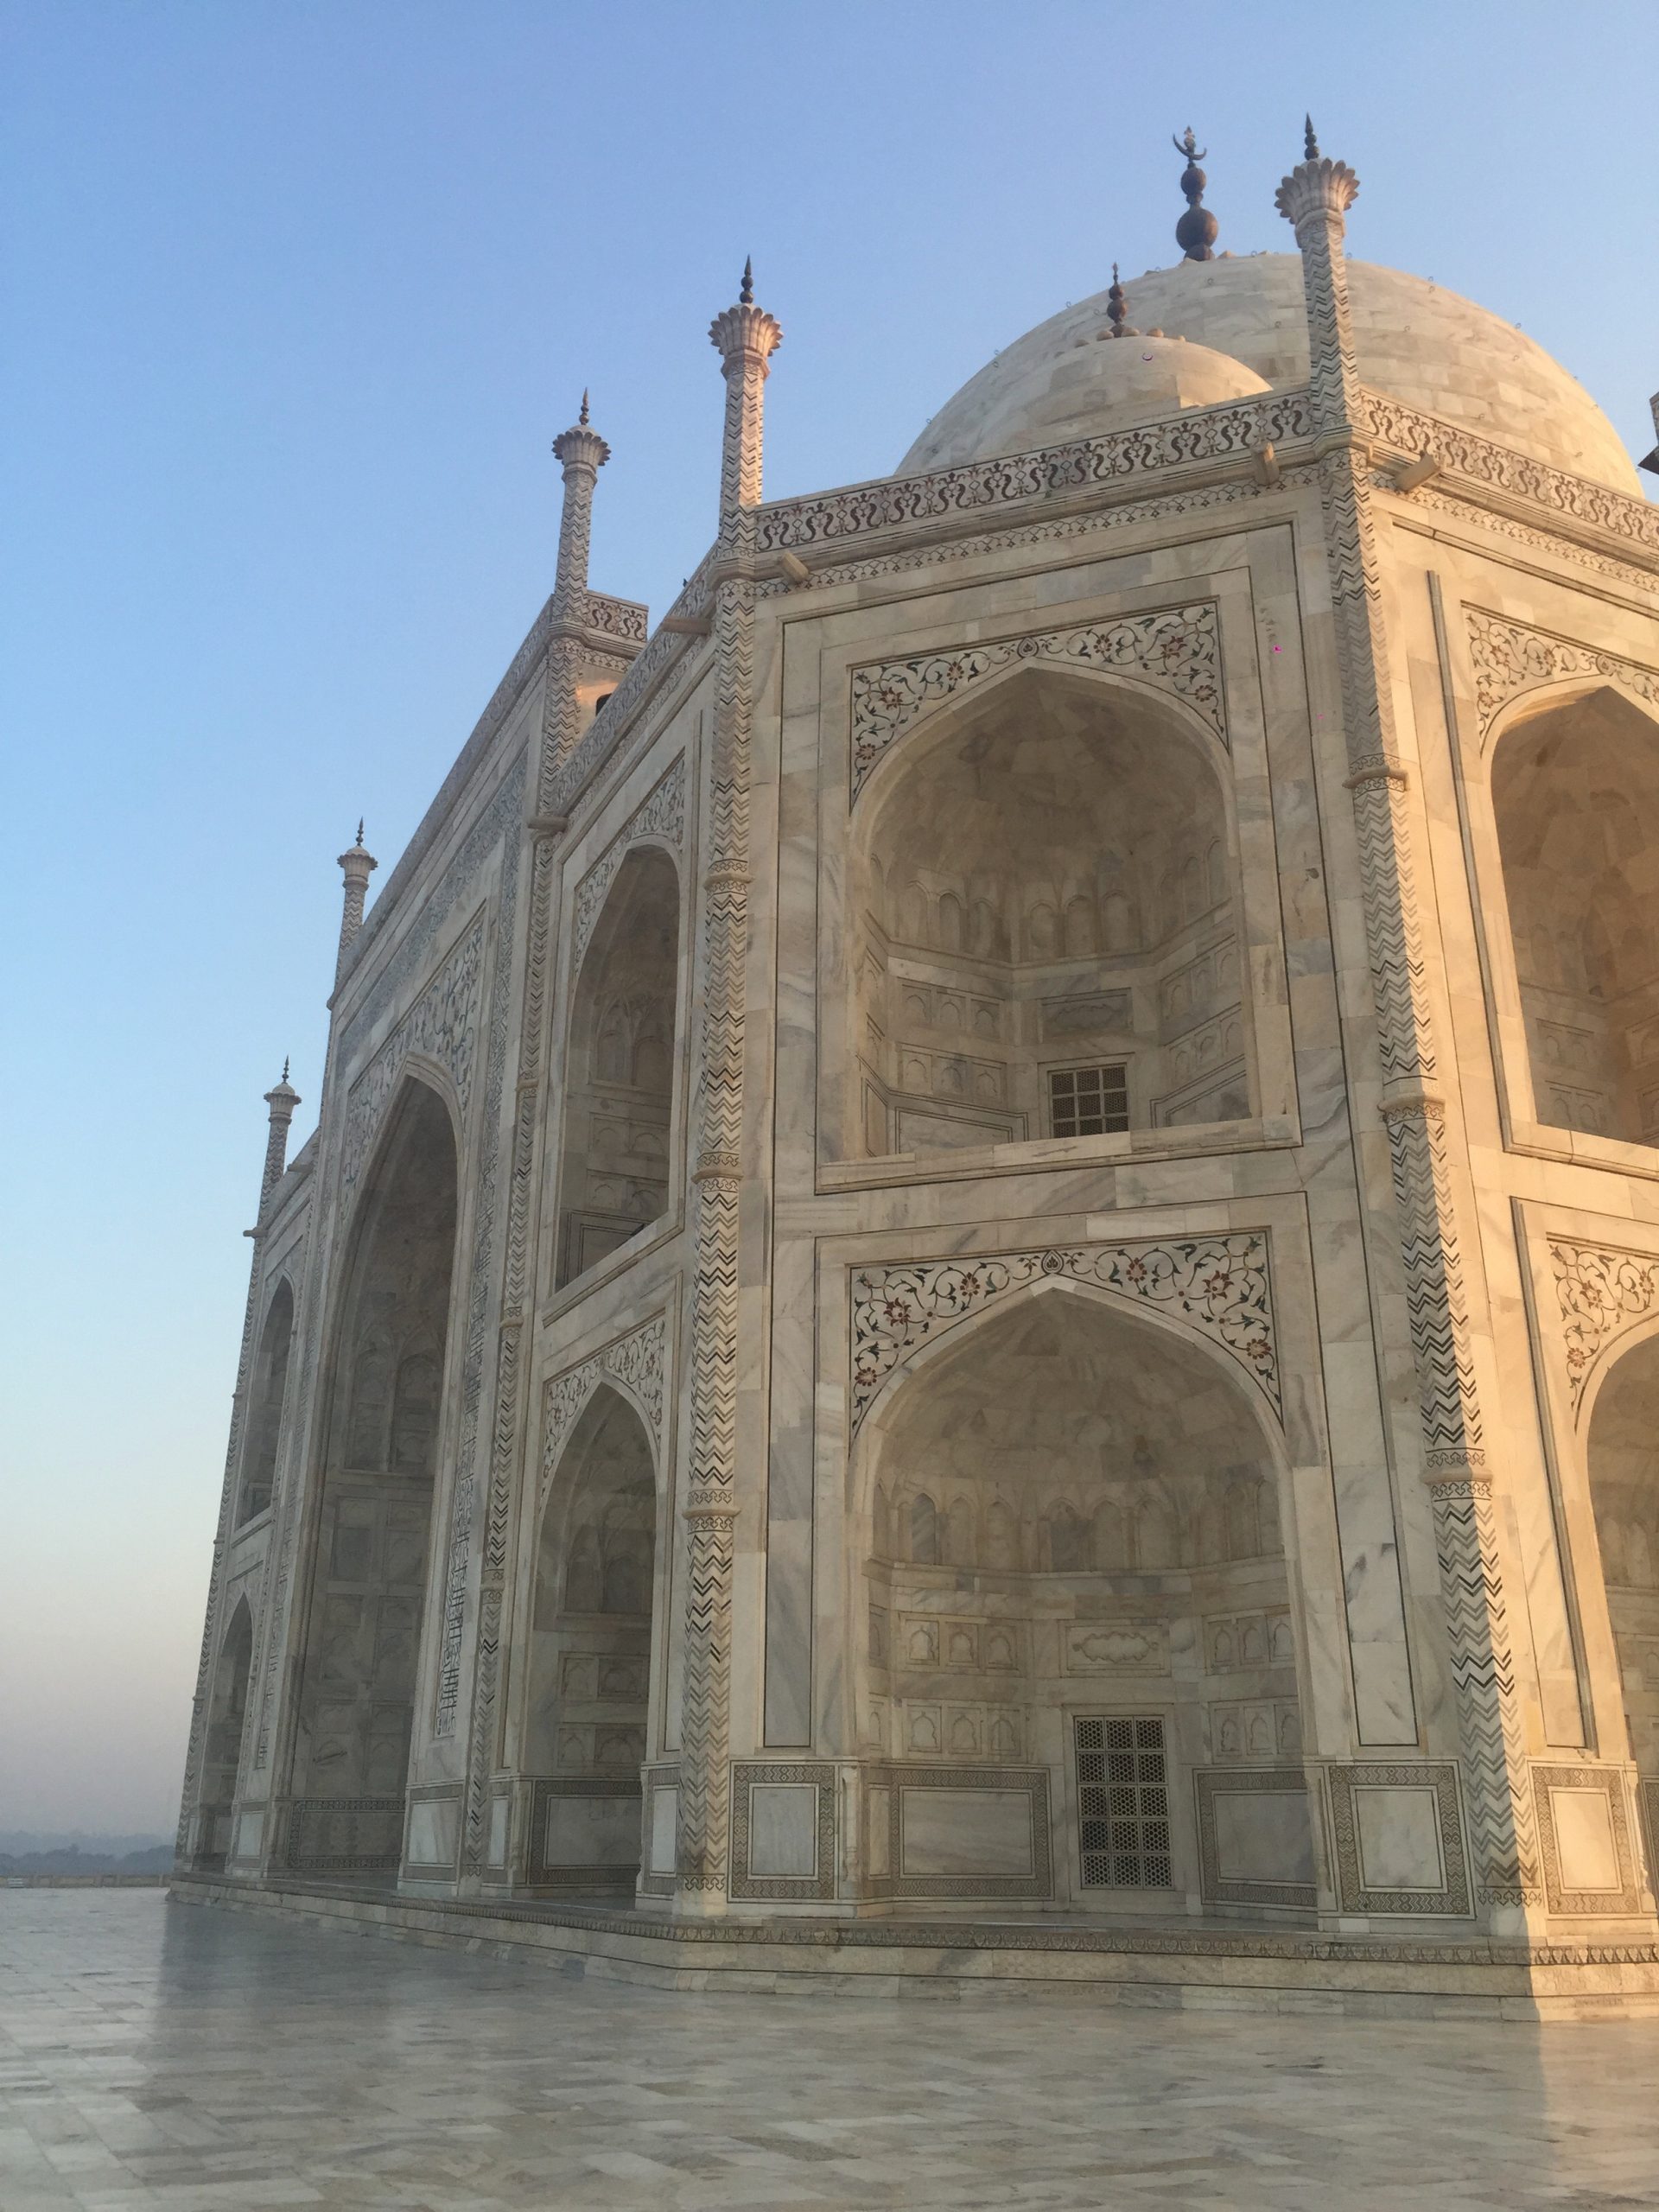 The Taj Mahal in India. All alone at the Taj Mahal